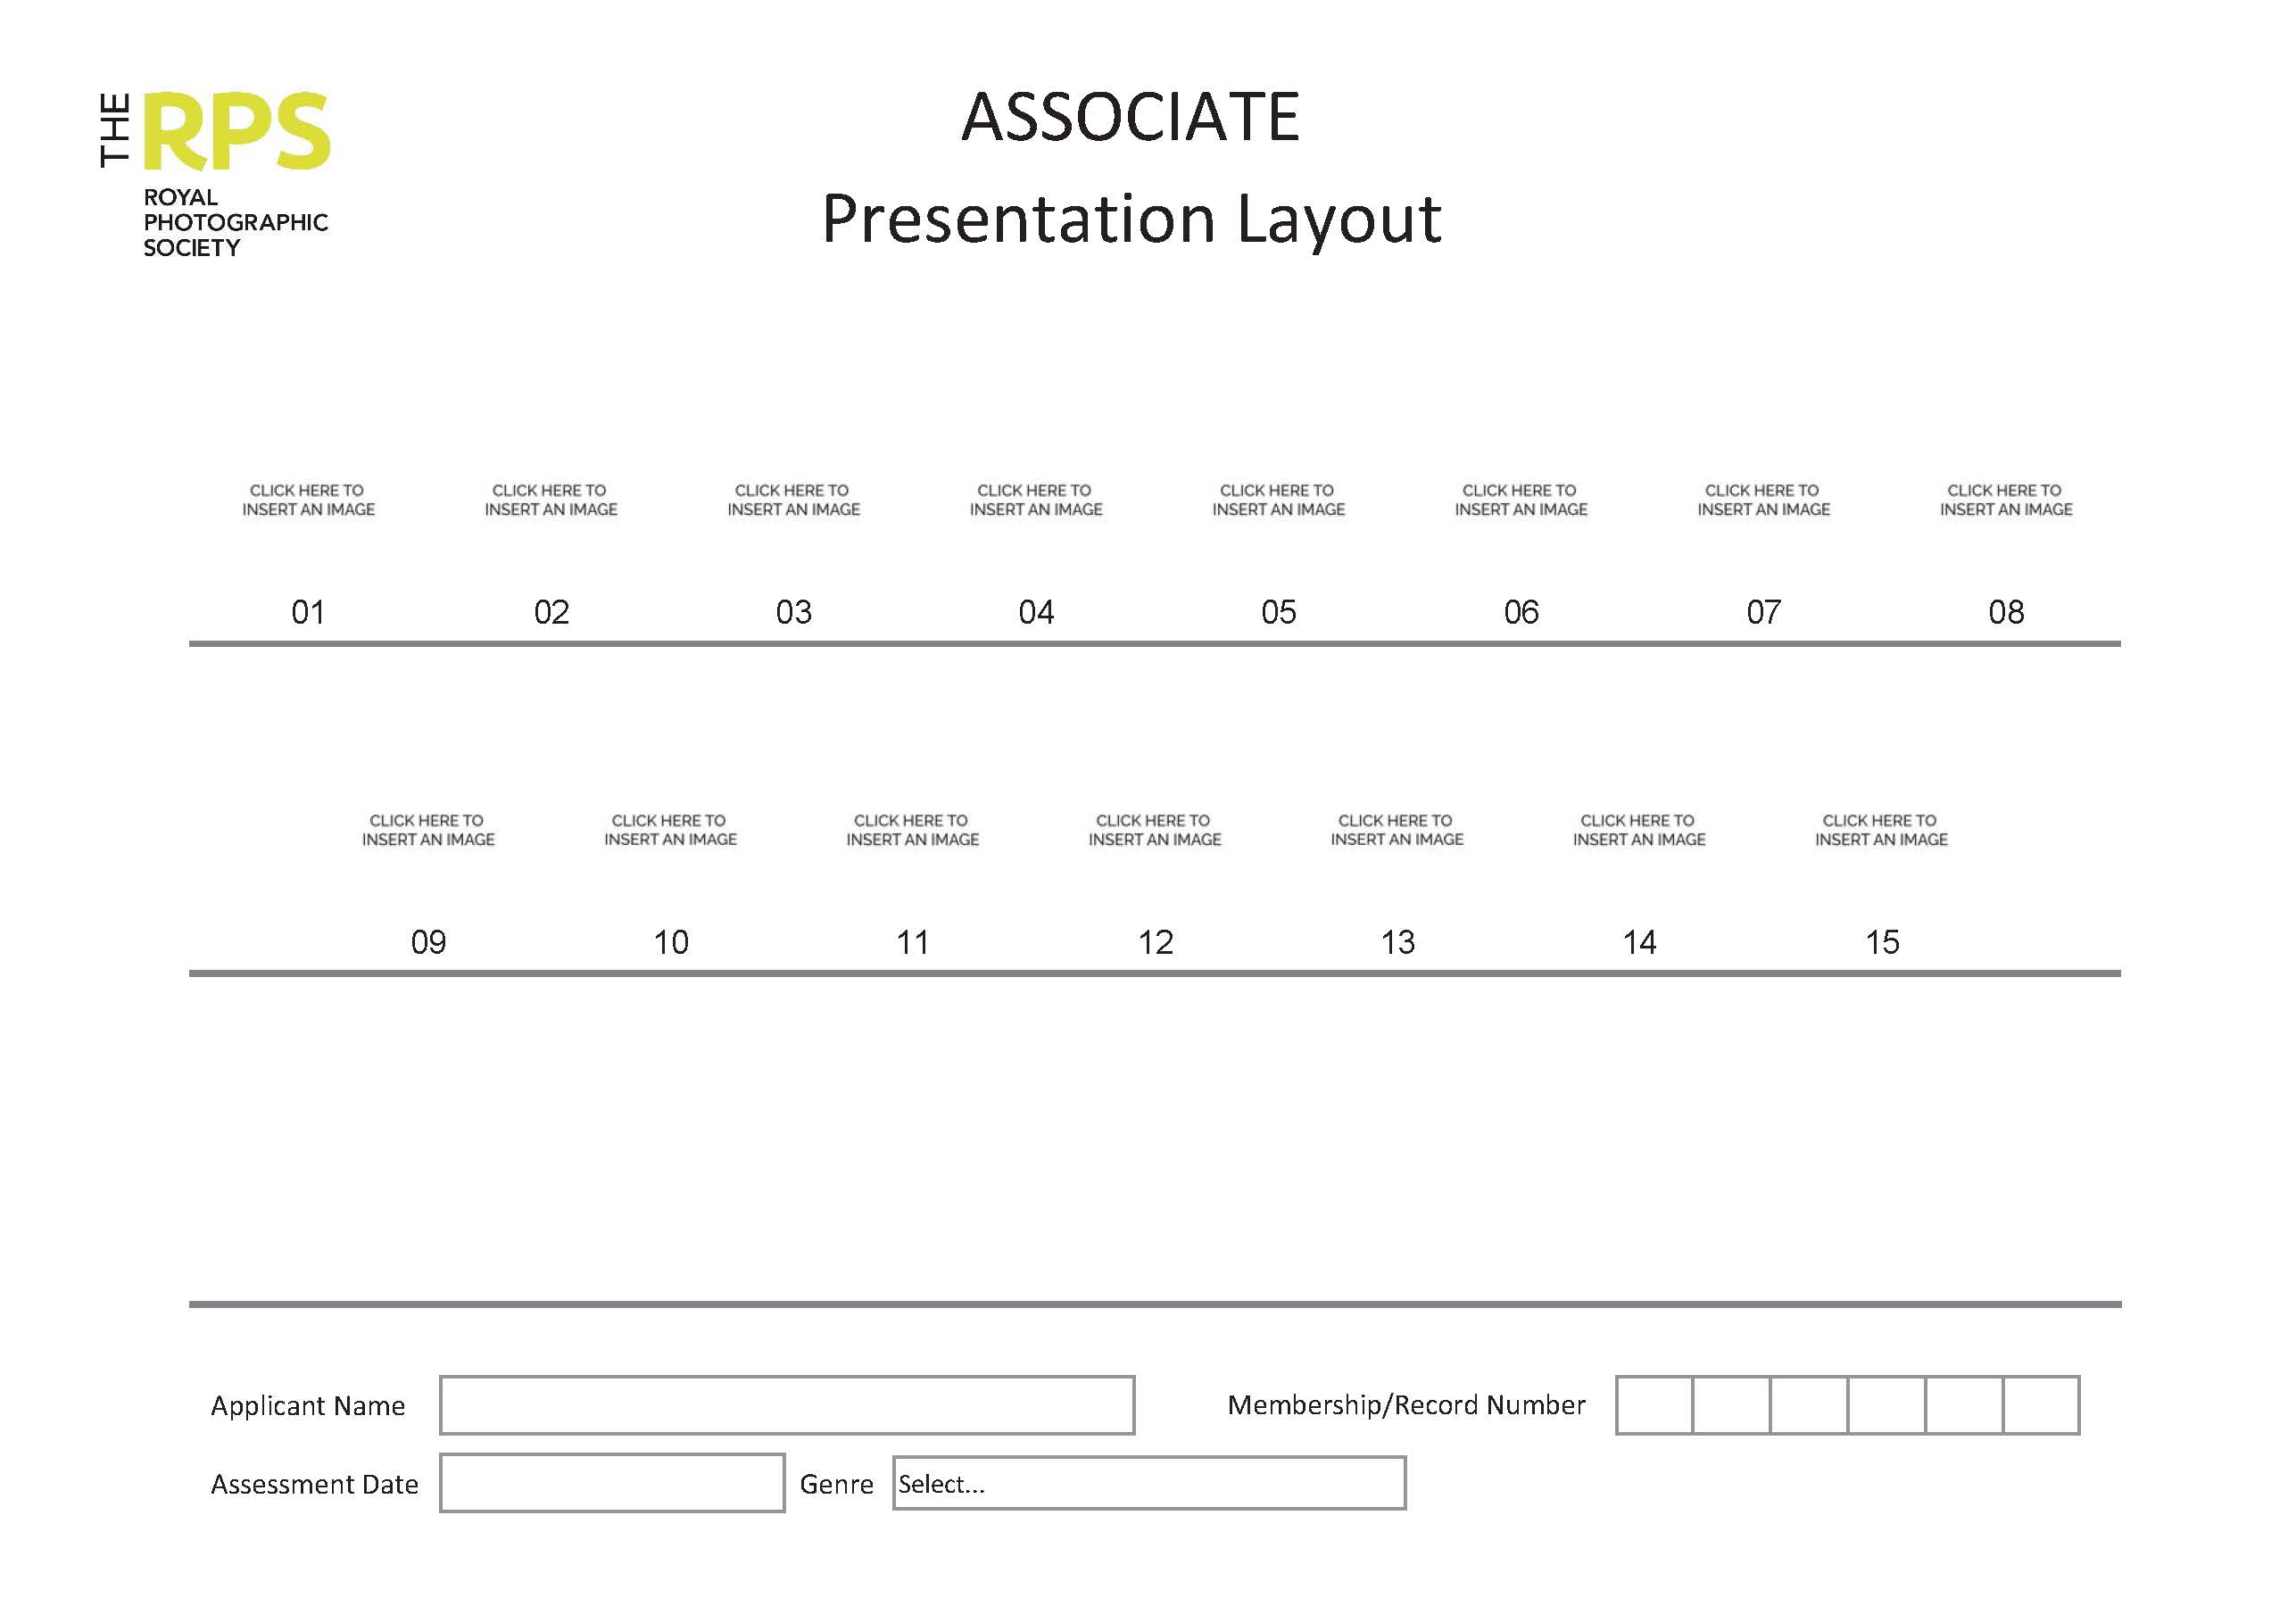 ARPS 2021 Presentation Layout 8 7